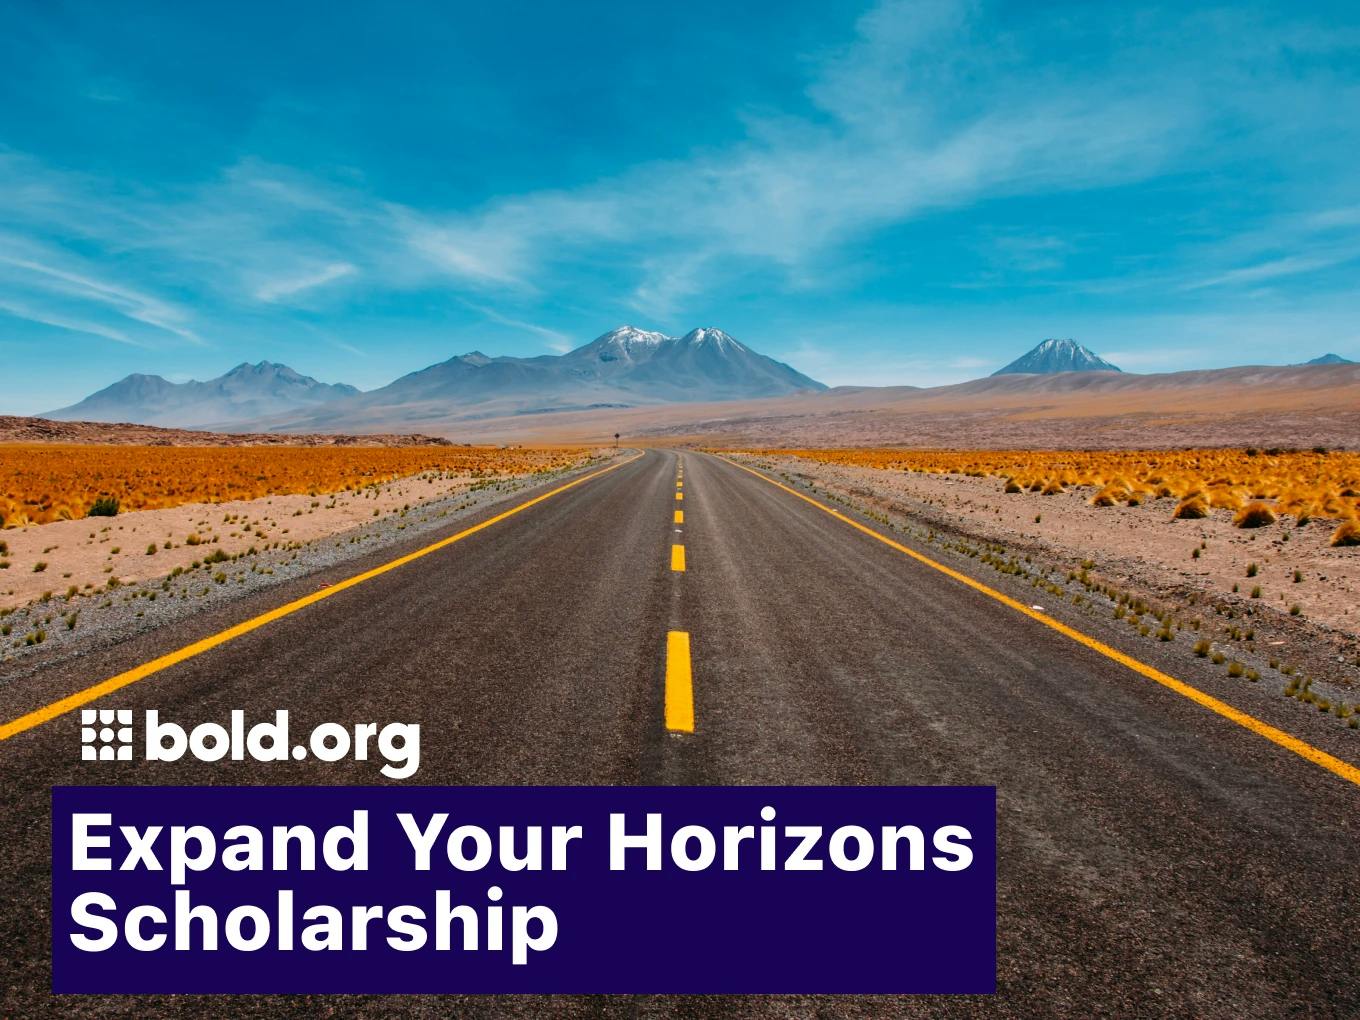 Across Cultures "Expand Your Horizons" Scholarship